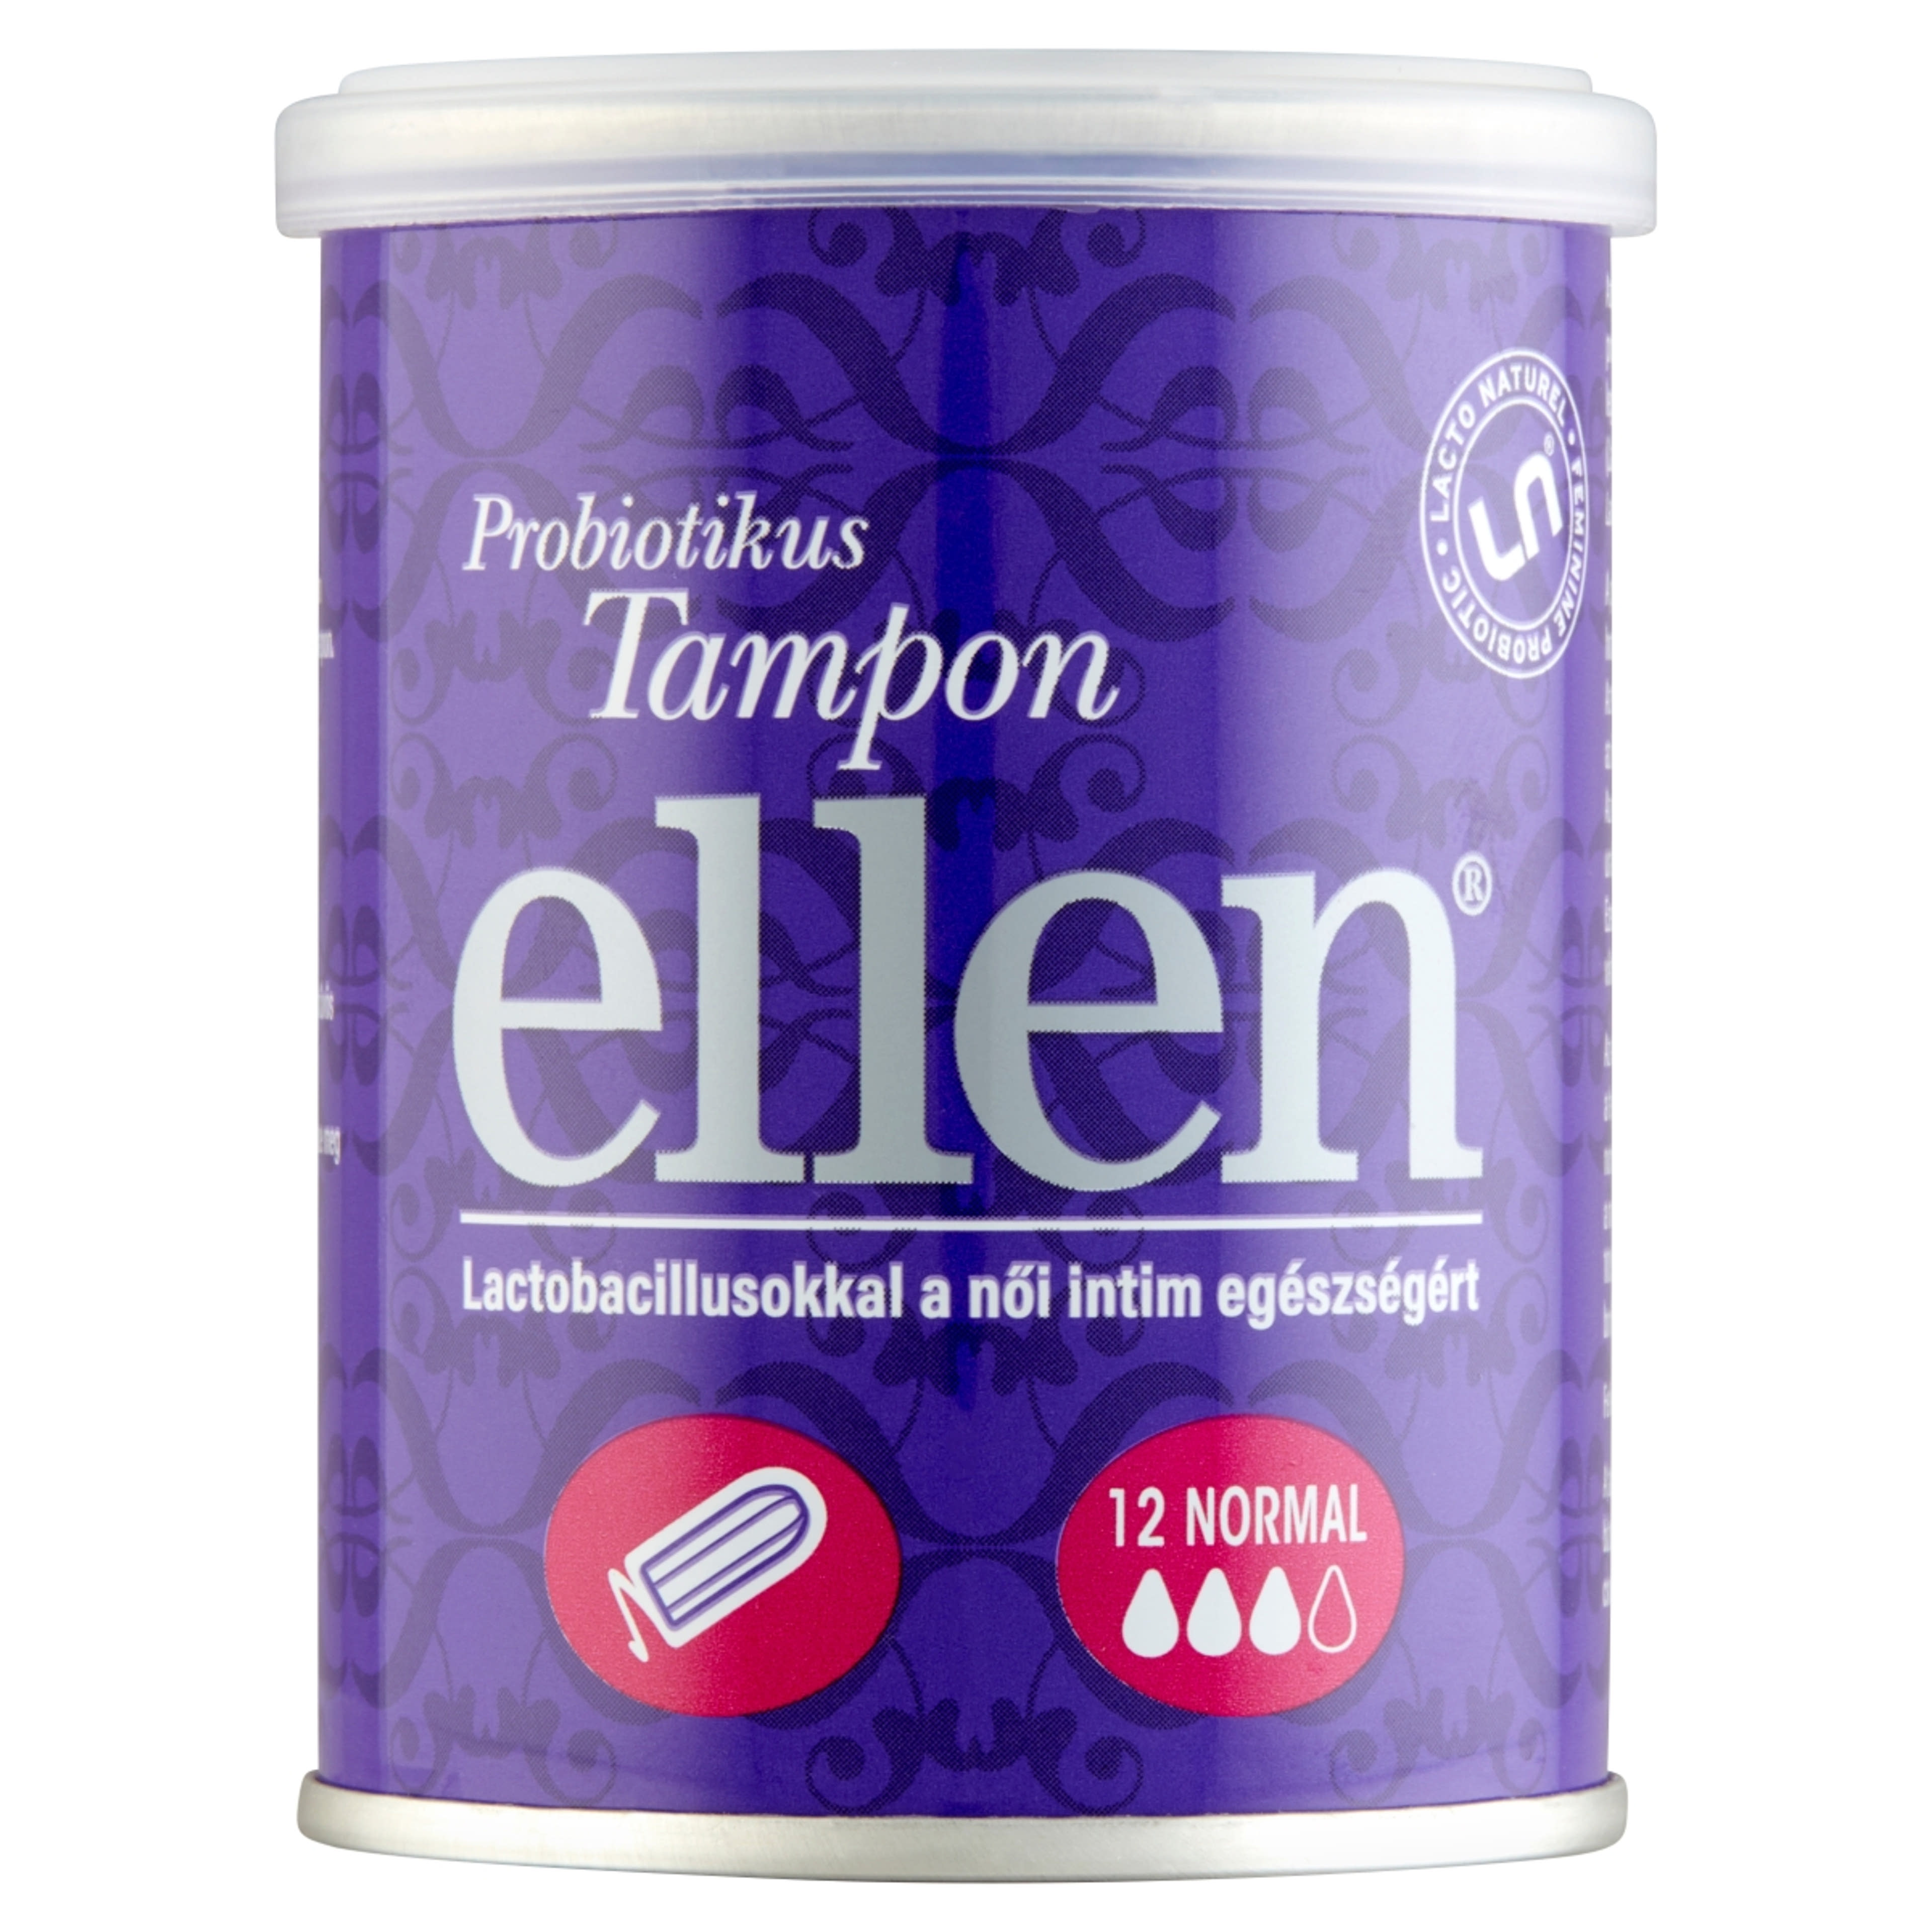 Ellen probiotikus tampon, normál - 12 db